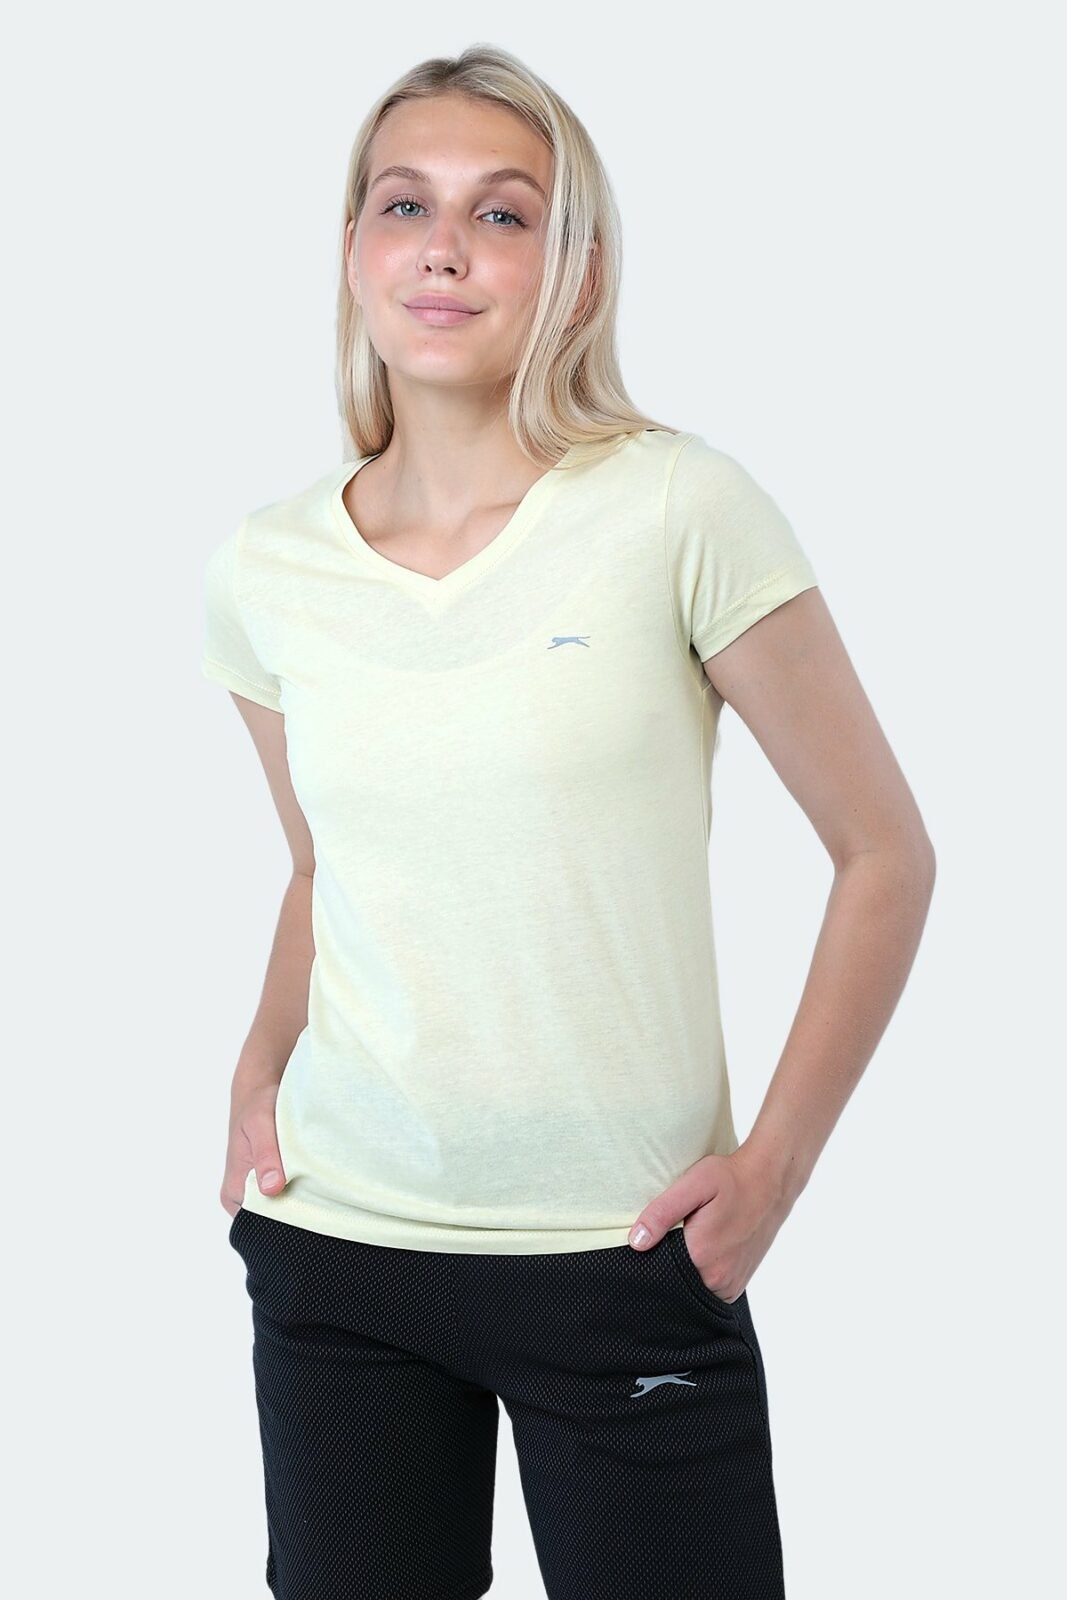 Slazenger T-Shirt - Yellow -